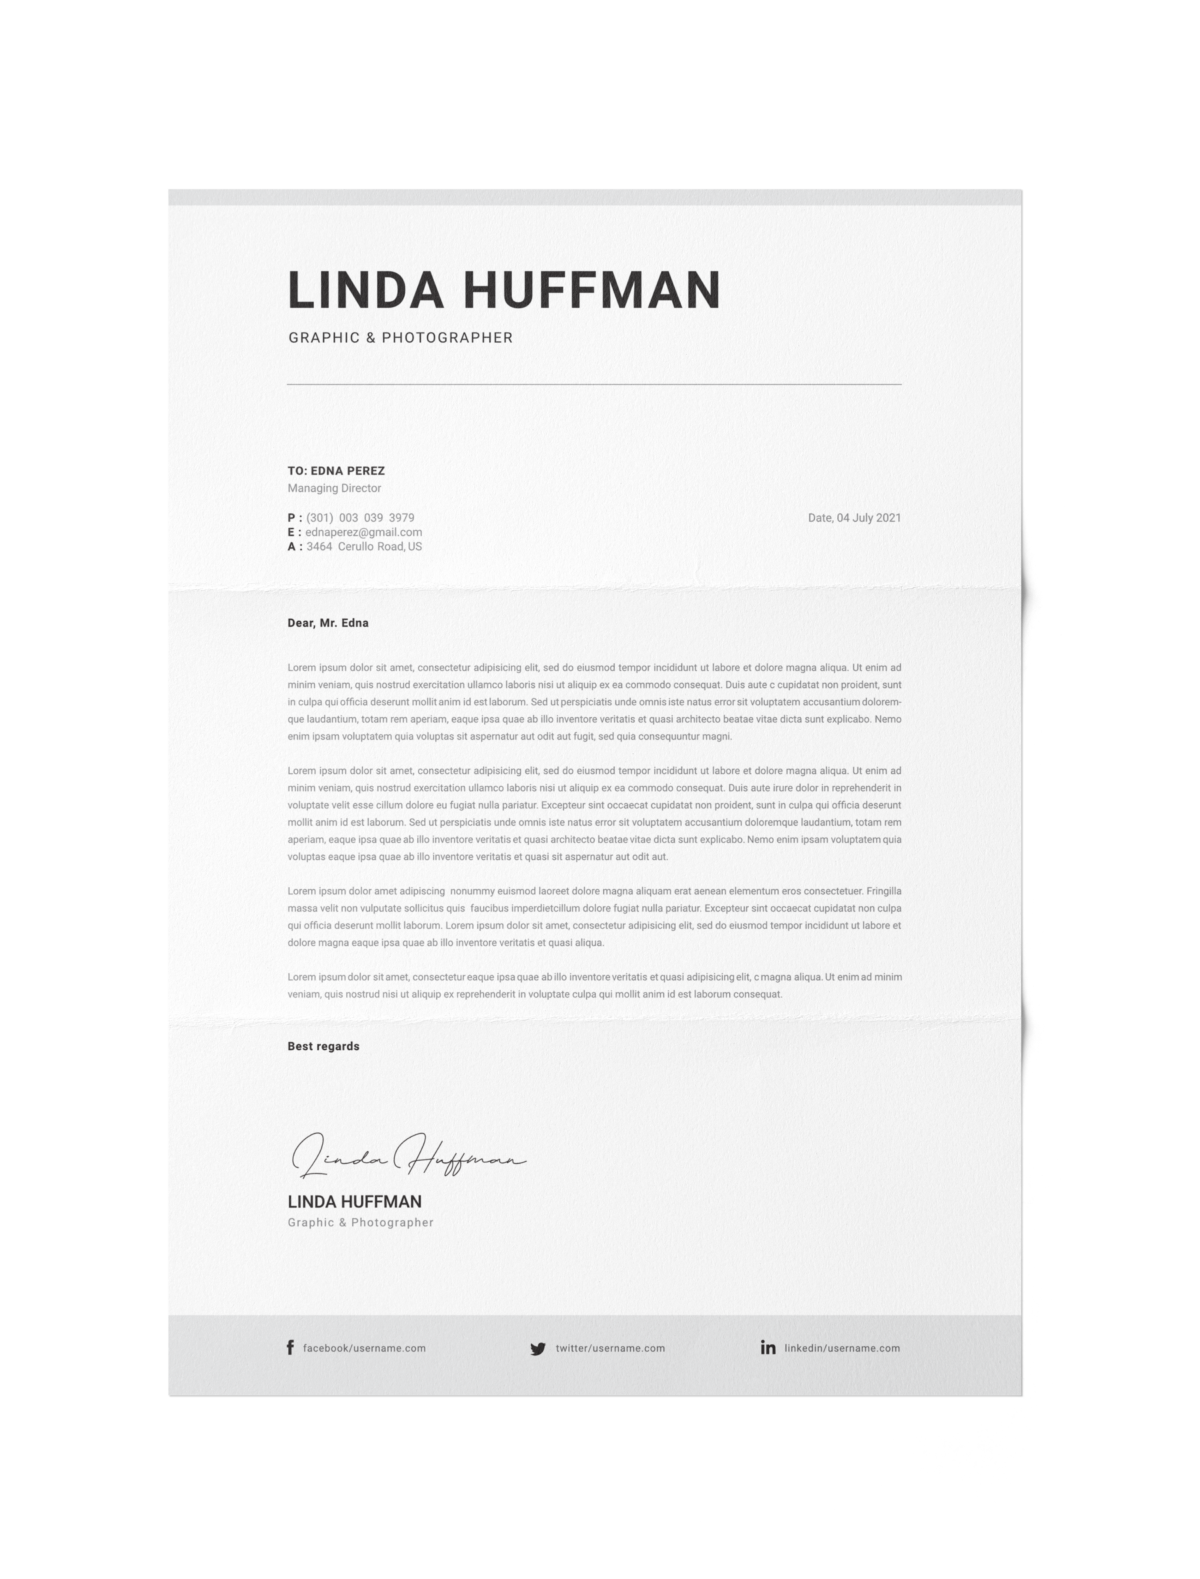 CV #70 Linda Huffman